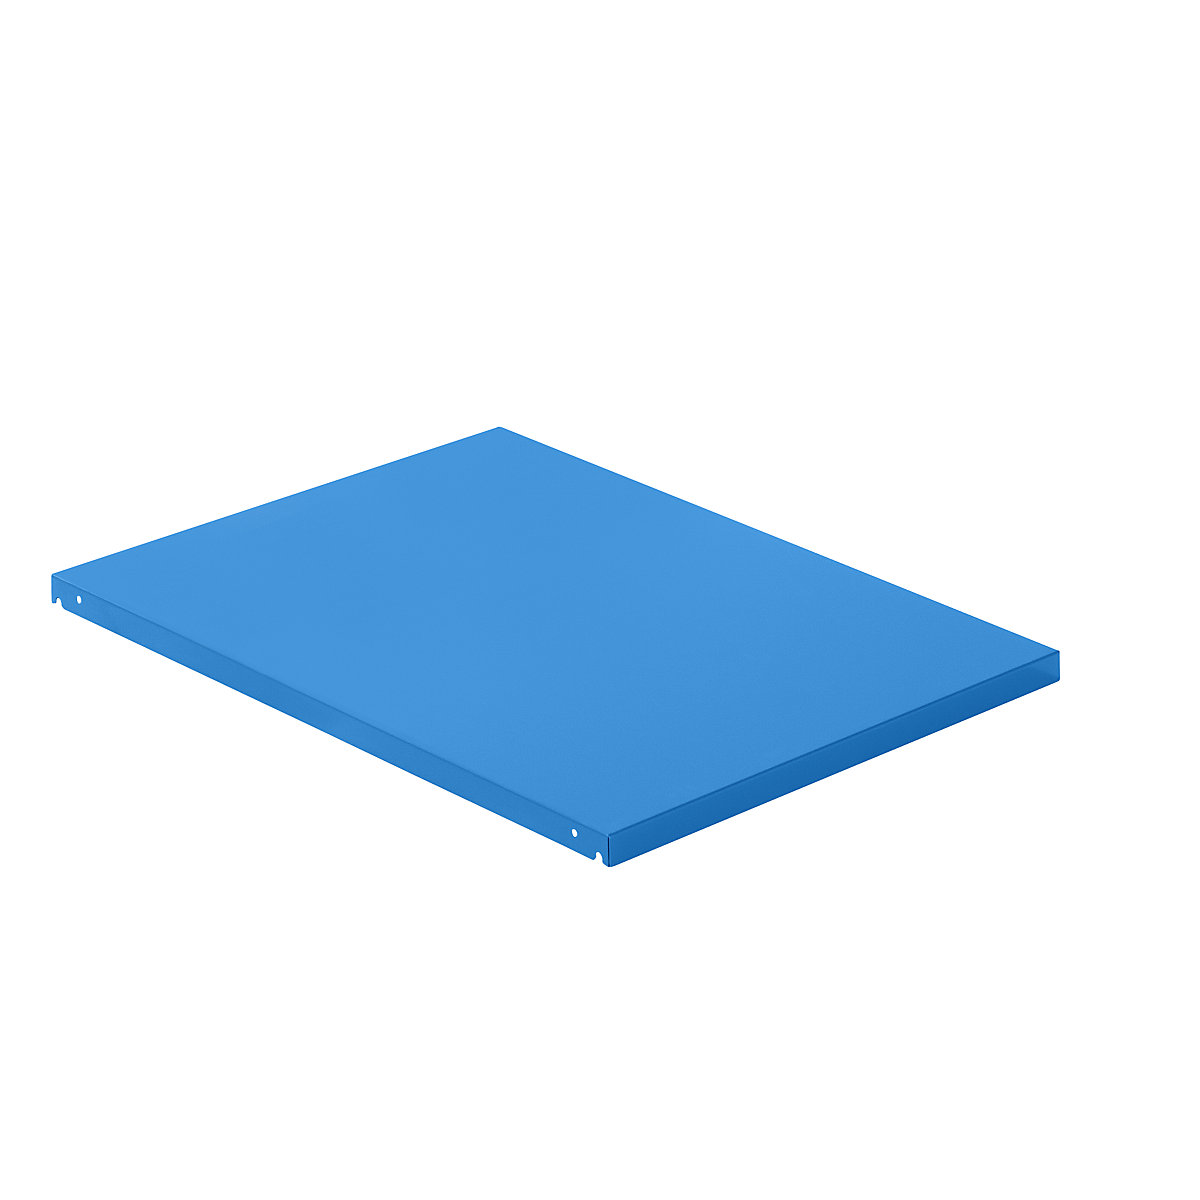 Sheet steel top shelf – LISTA, WxD 890 x 1260 mm, max. shelf load 100 kg, light blue